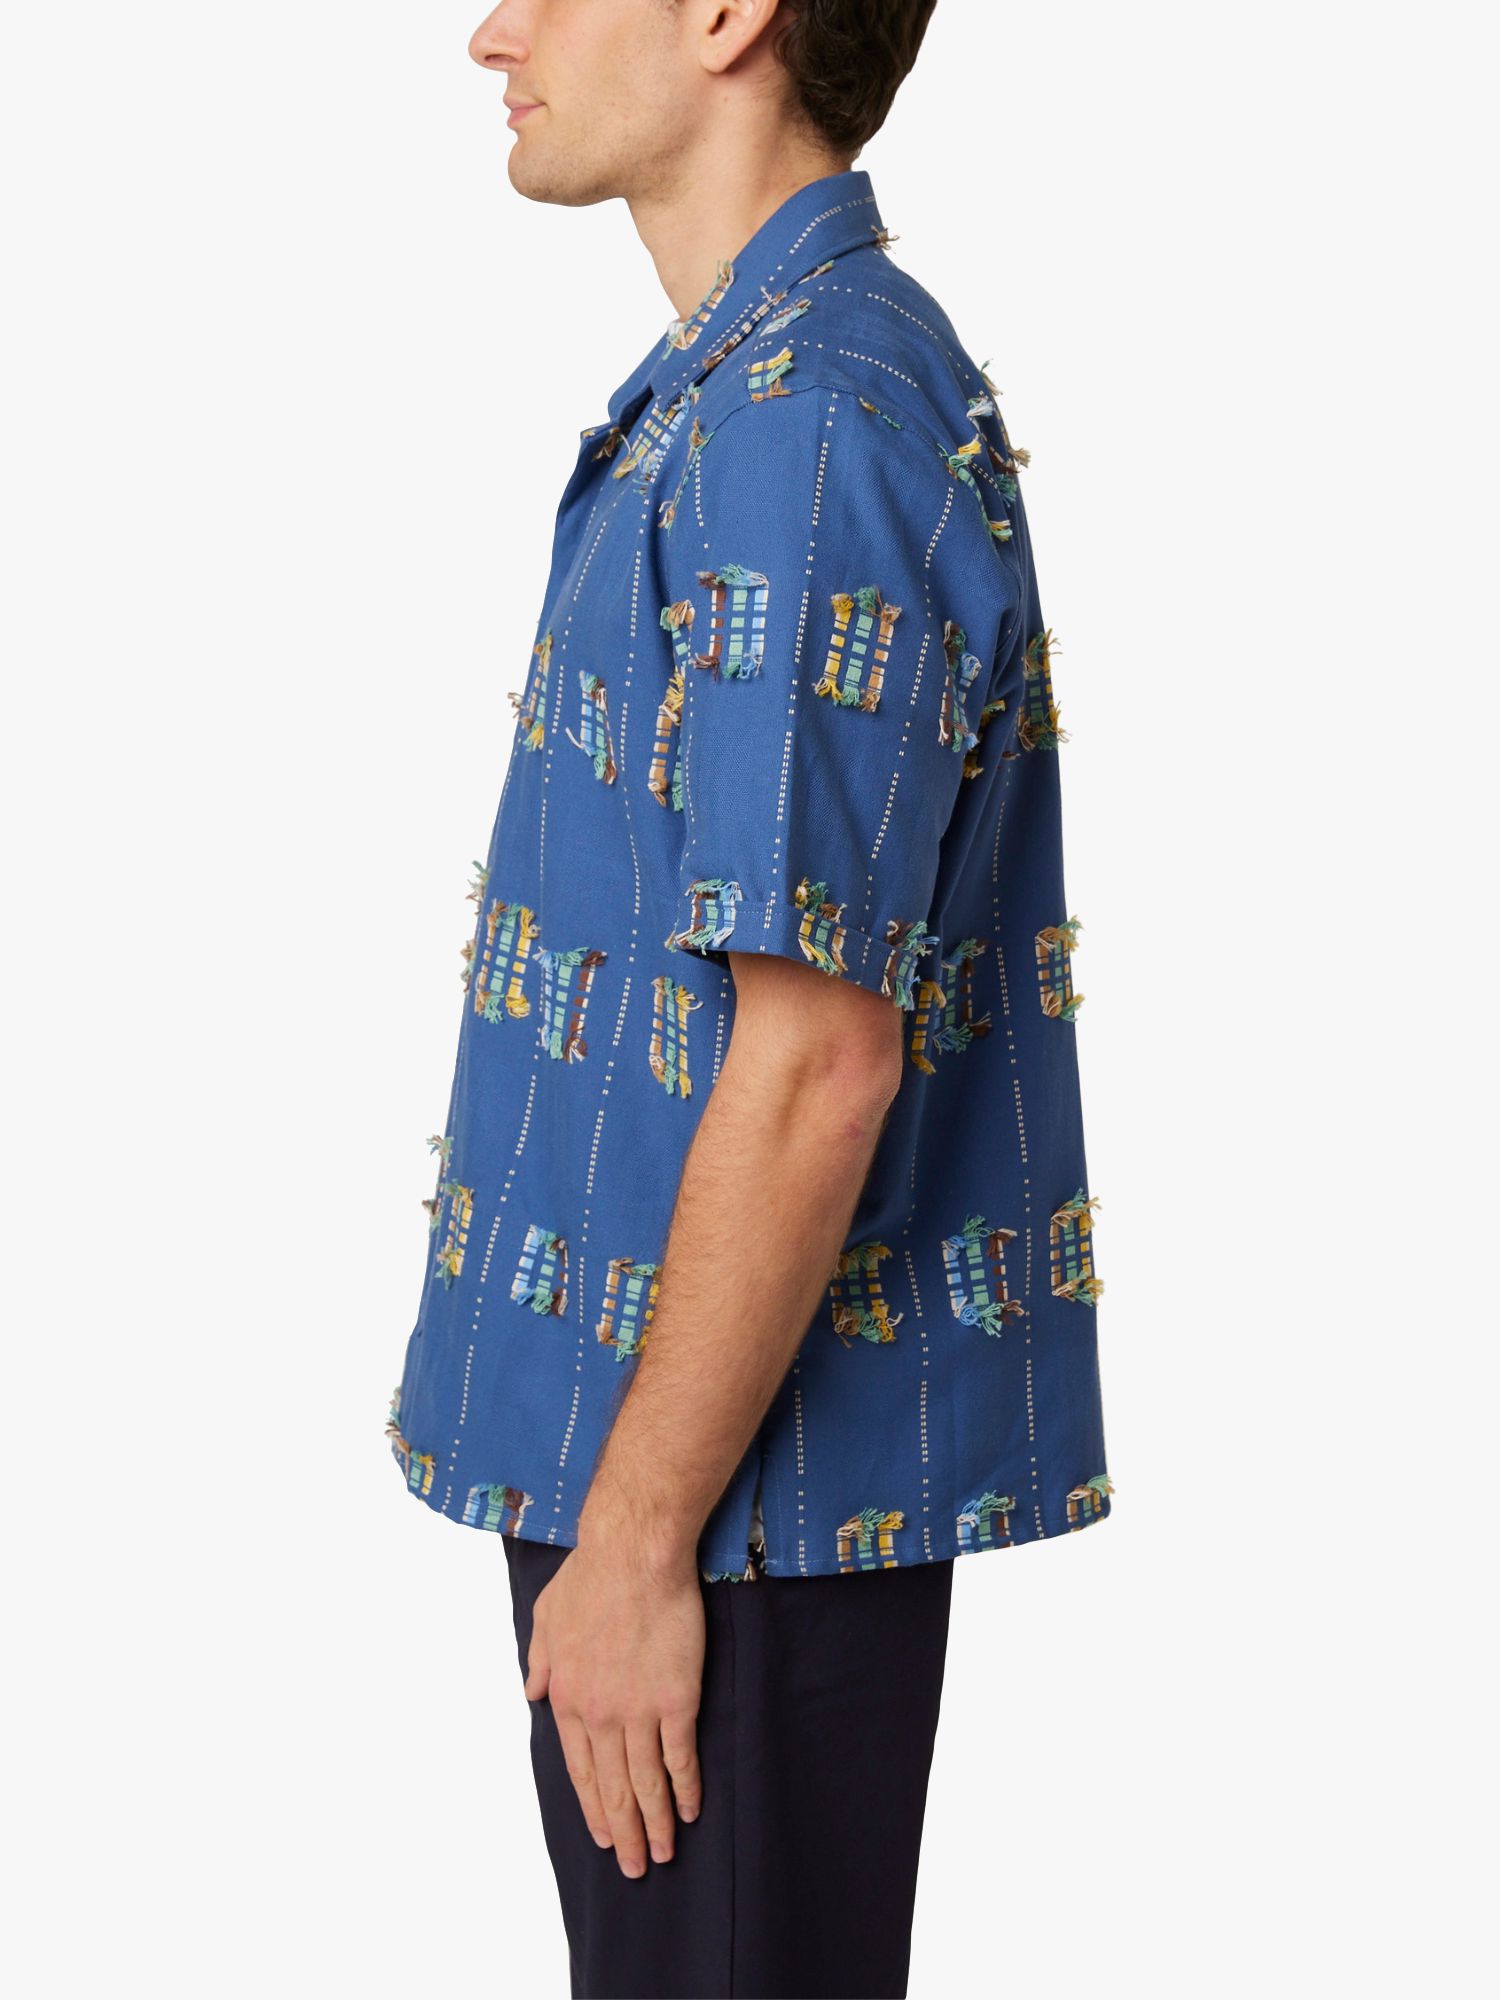 Peregrine Creek Short Sleeve Shirt, Blue/Multi, S